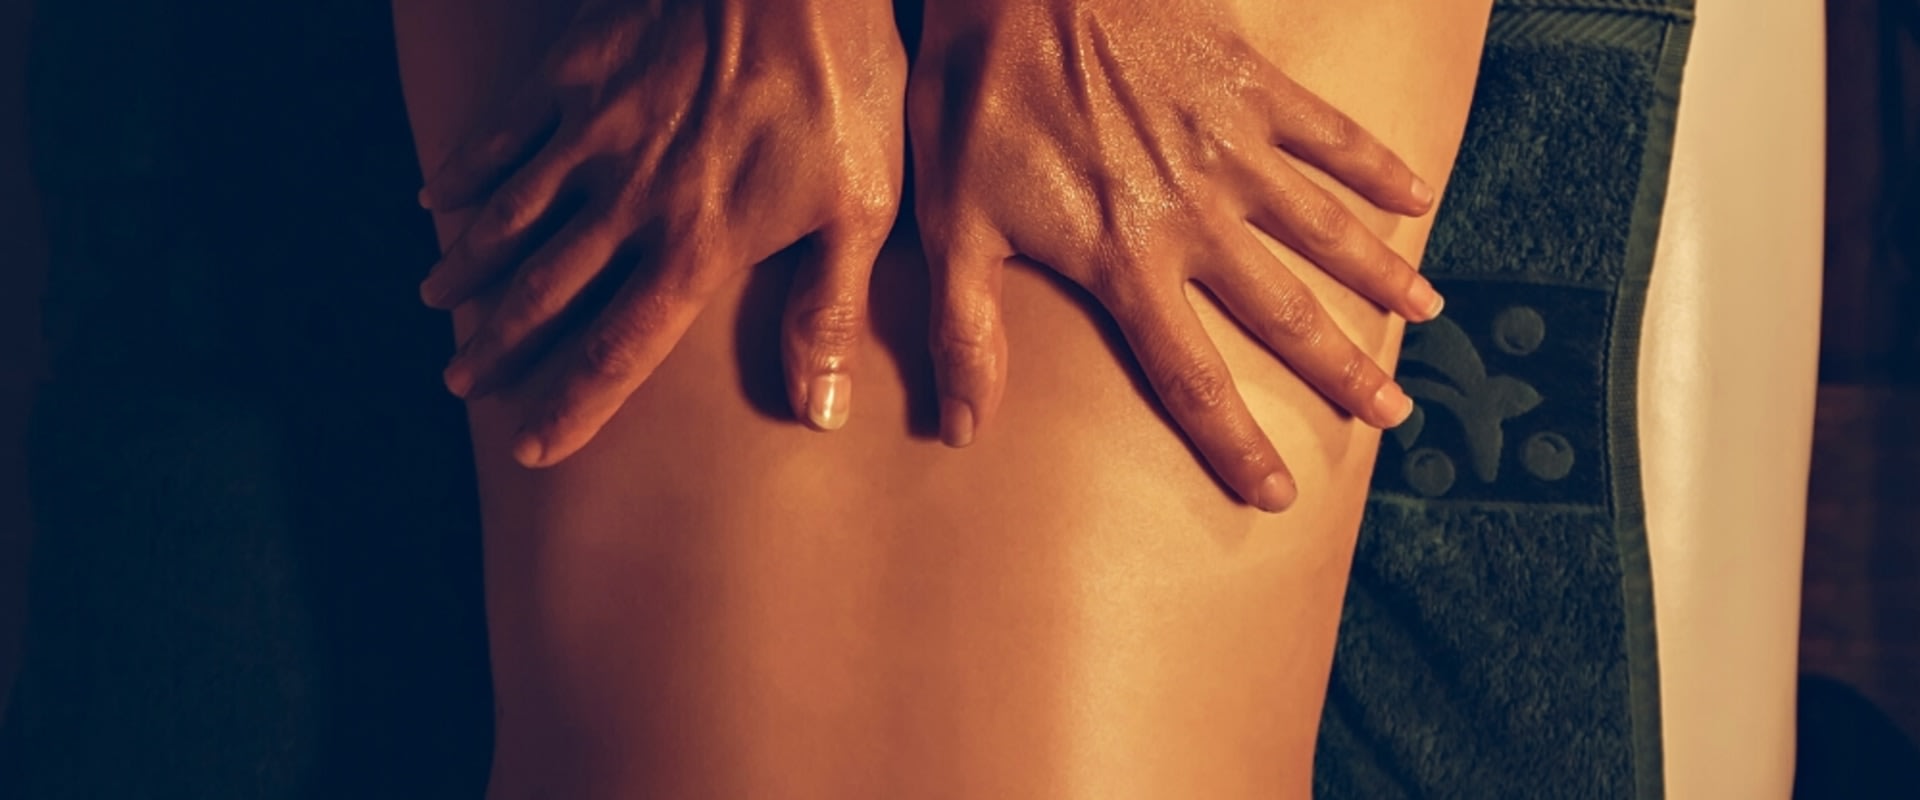 Massaging an Inflamed Nerve: Is it a Good Idea?